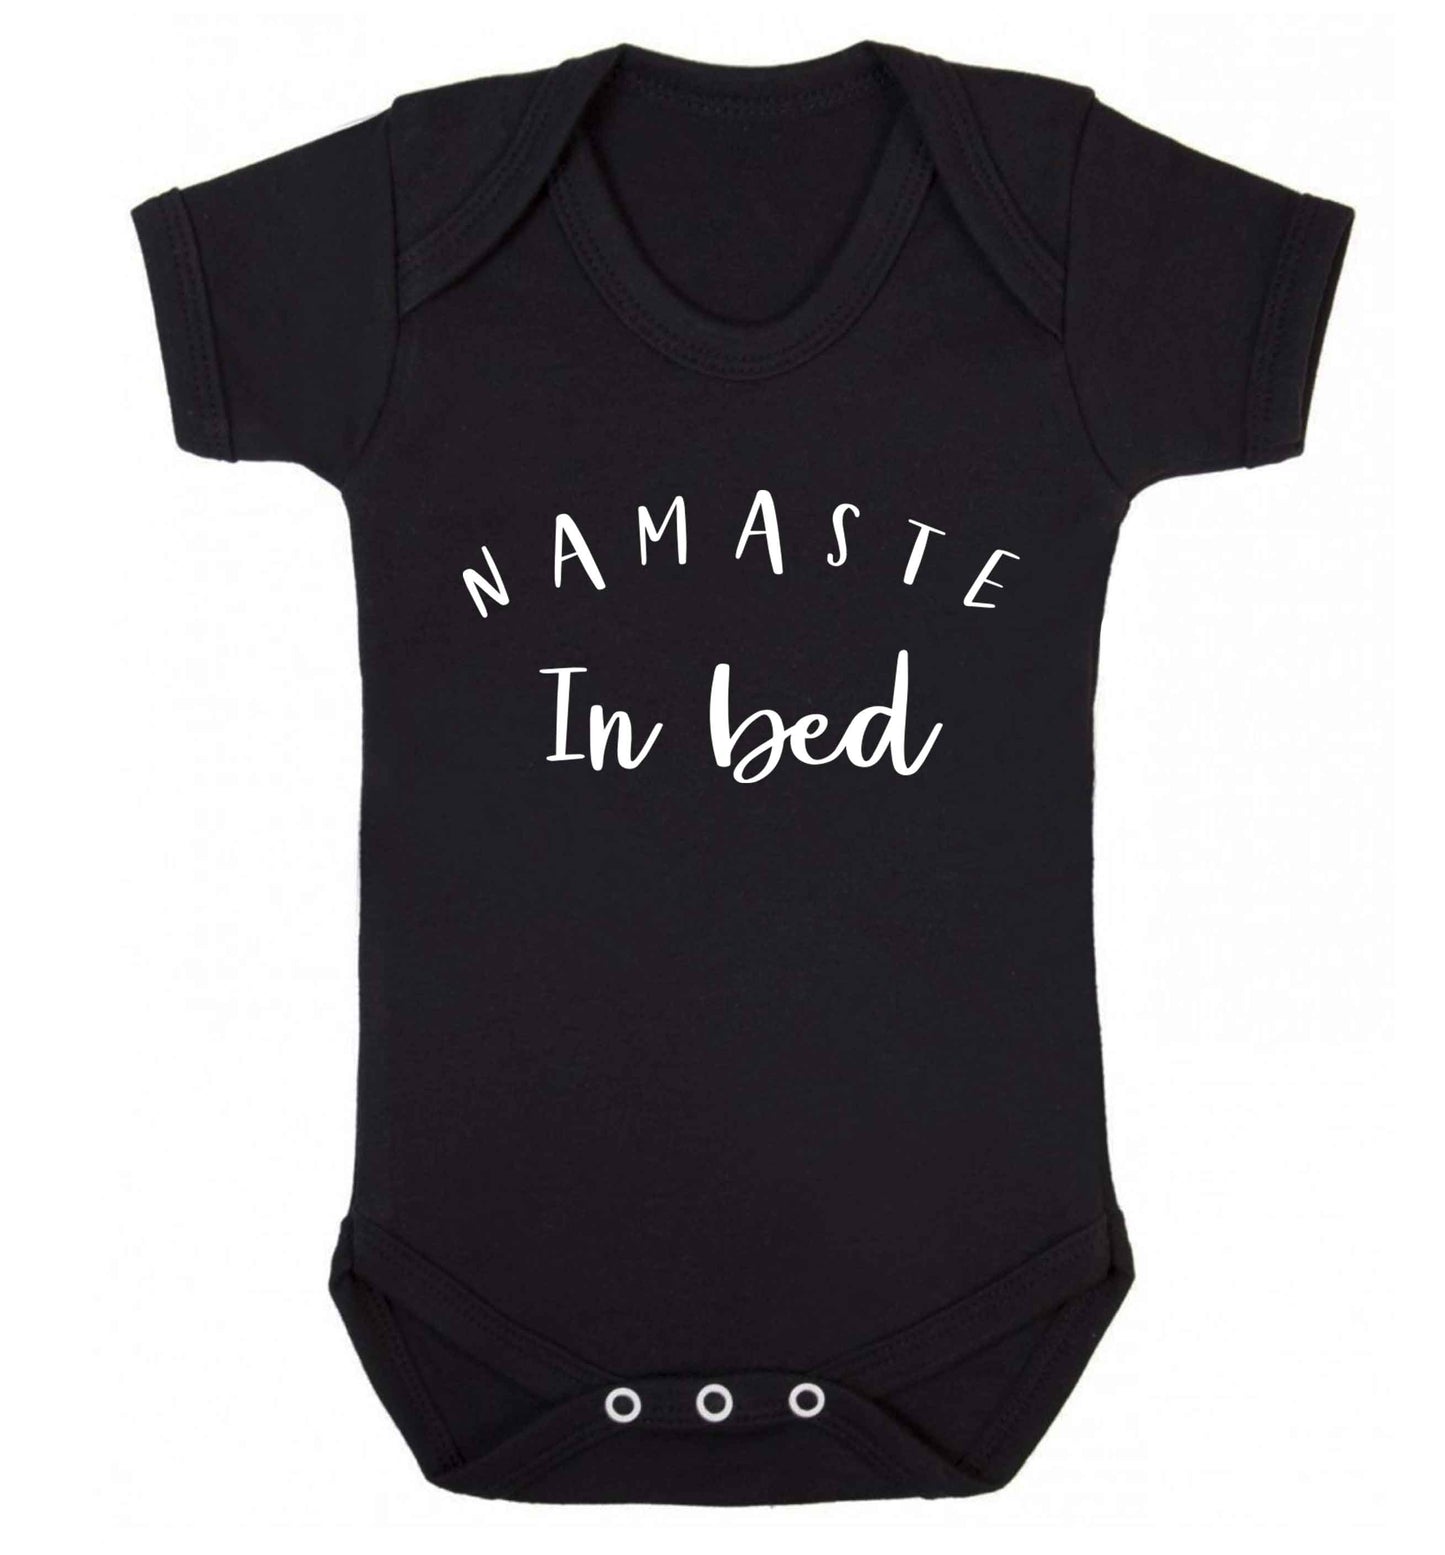 Namaste in bed Baby Vest black 18-24 months